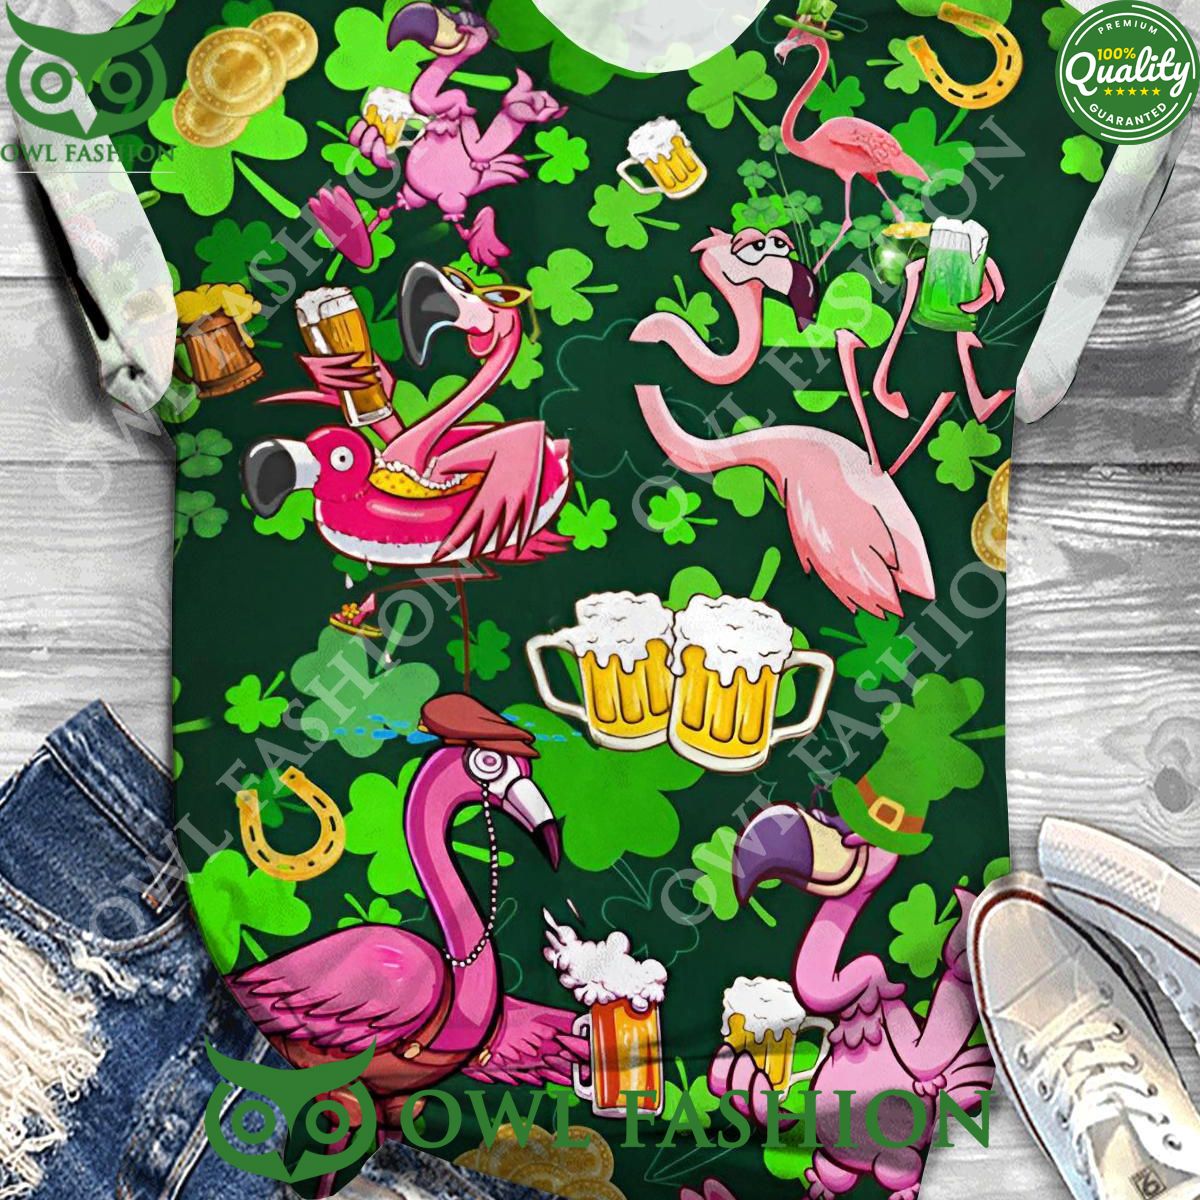 st patricks day flamingo beer print t shirt 1 c2Eqp.jpg